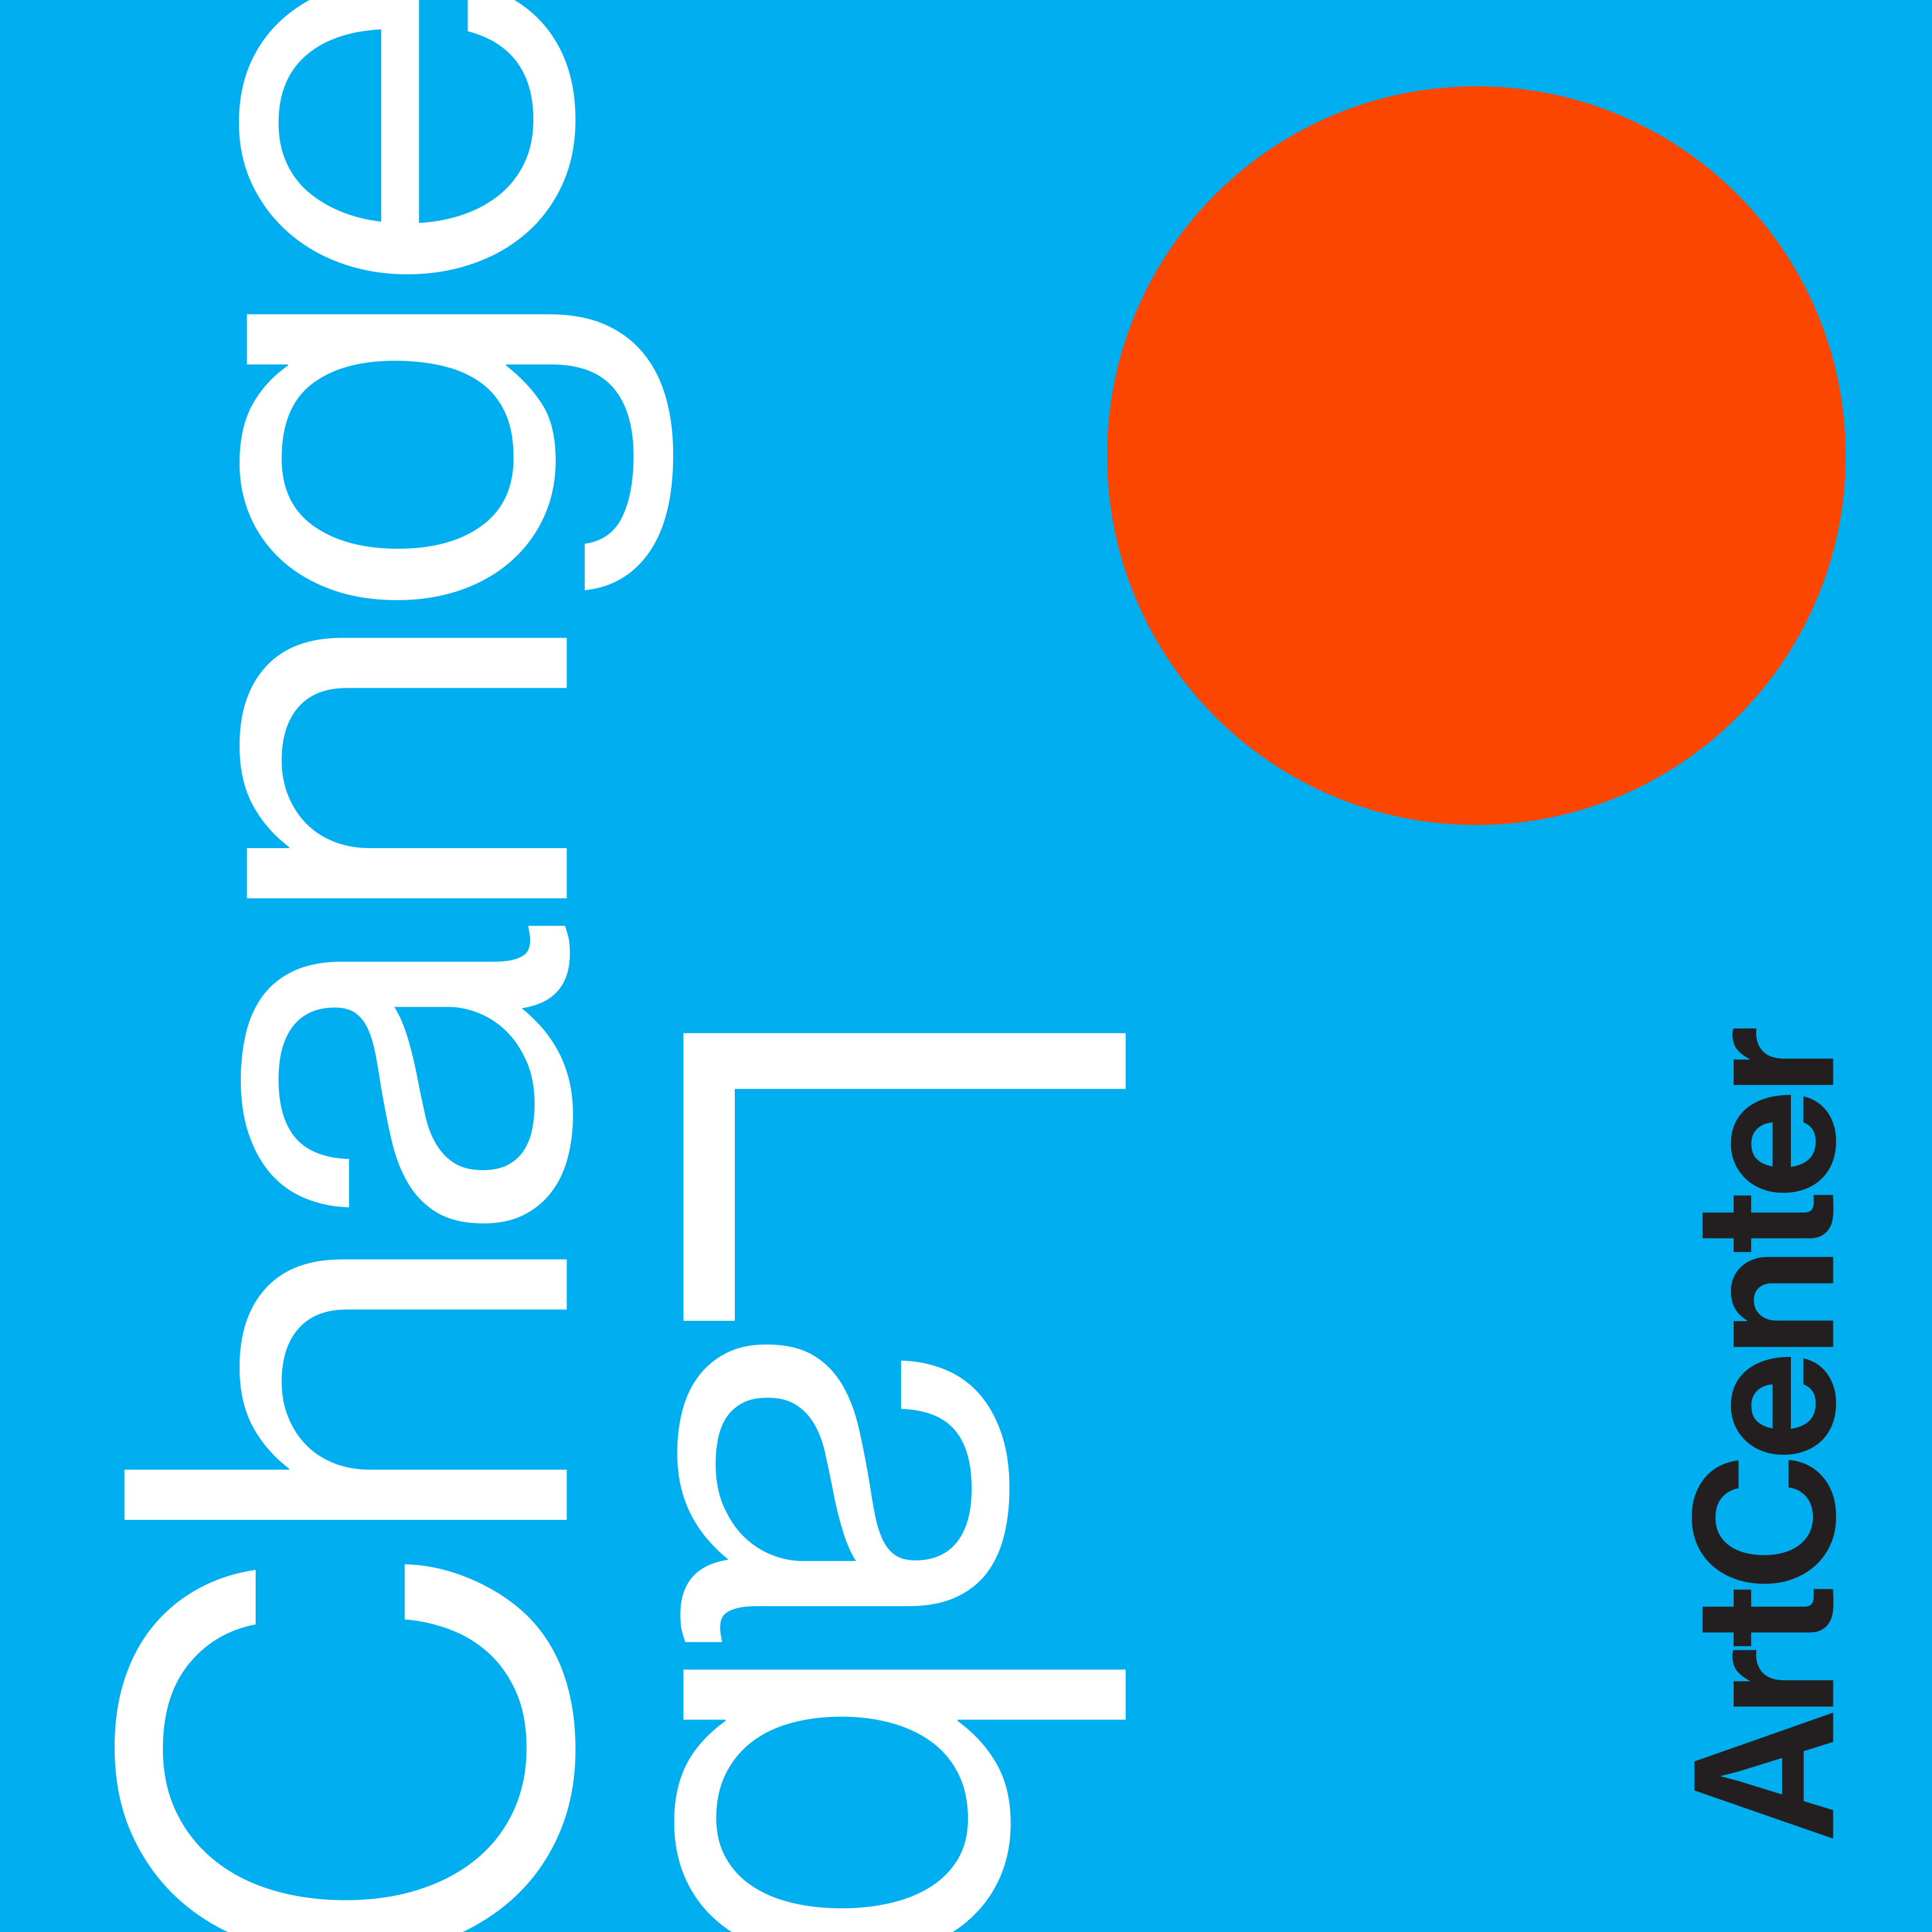 Change Lab podcast logo.